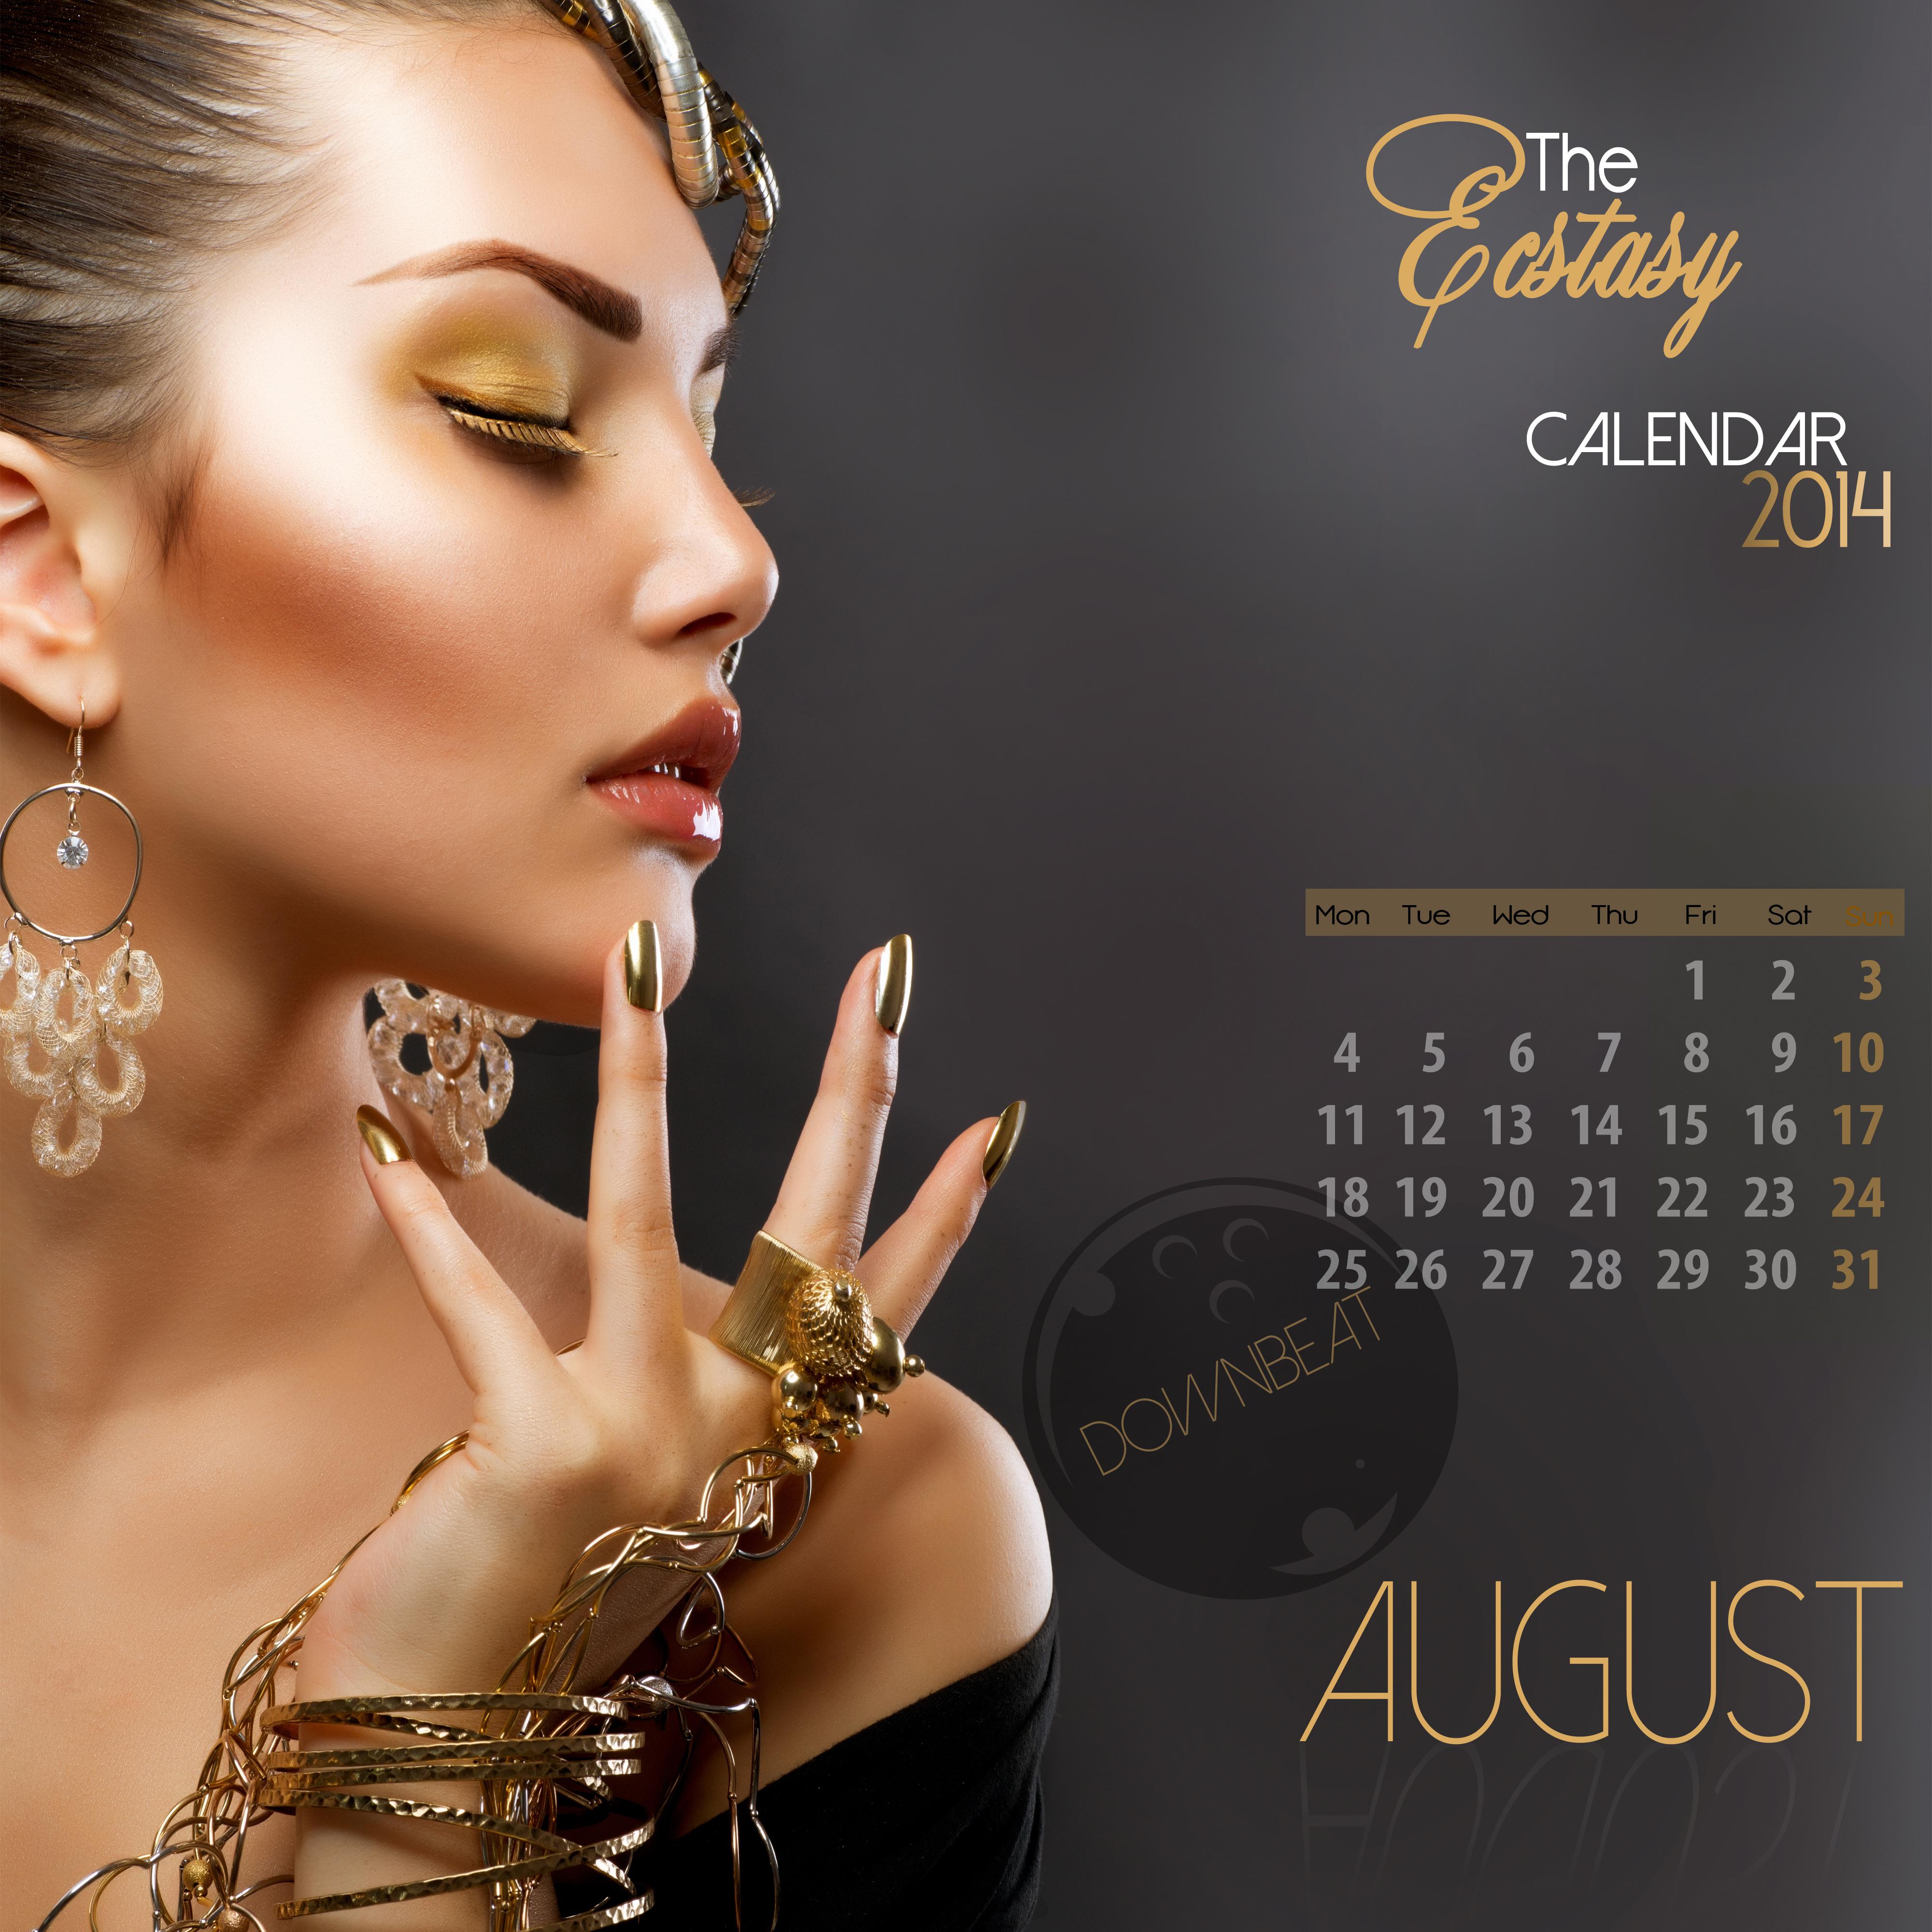 The Ecstasy Calendar 2014: August (Downbeat)